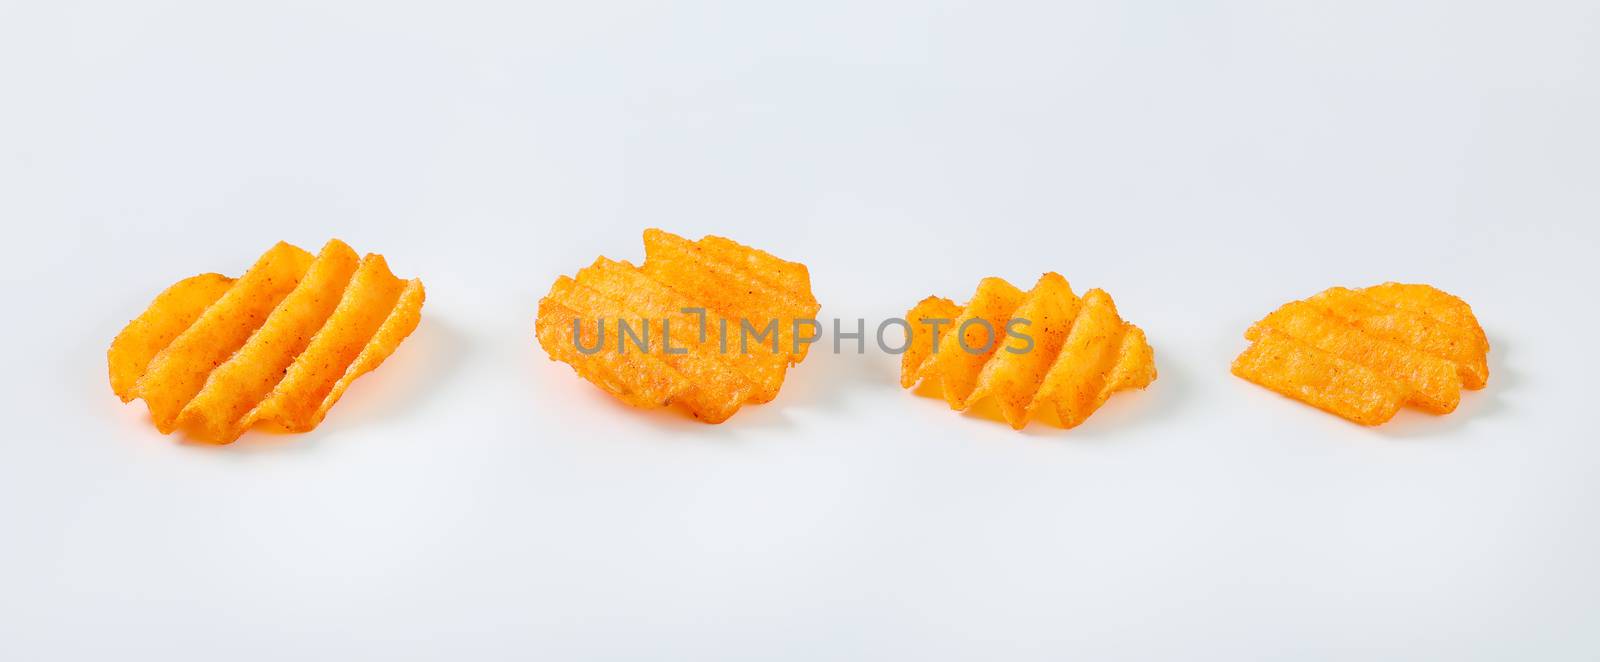 ridged potato chips by Digifoodstock